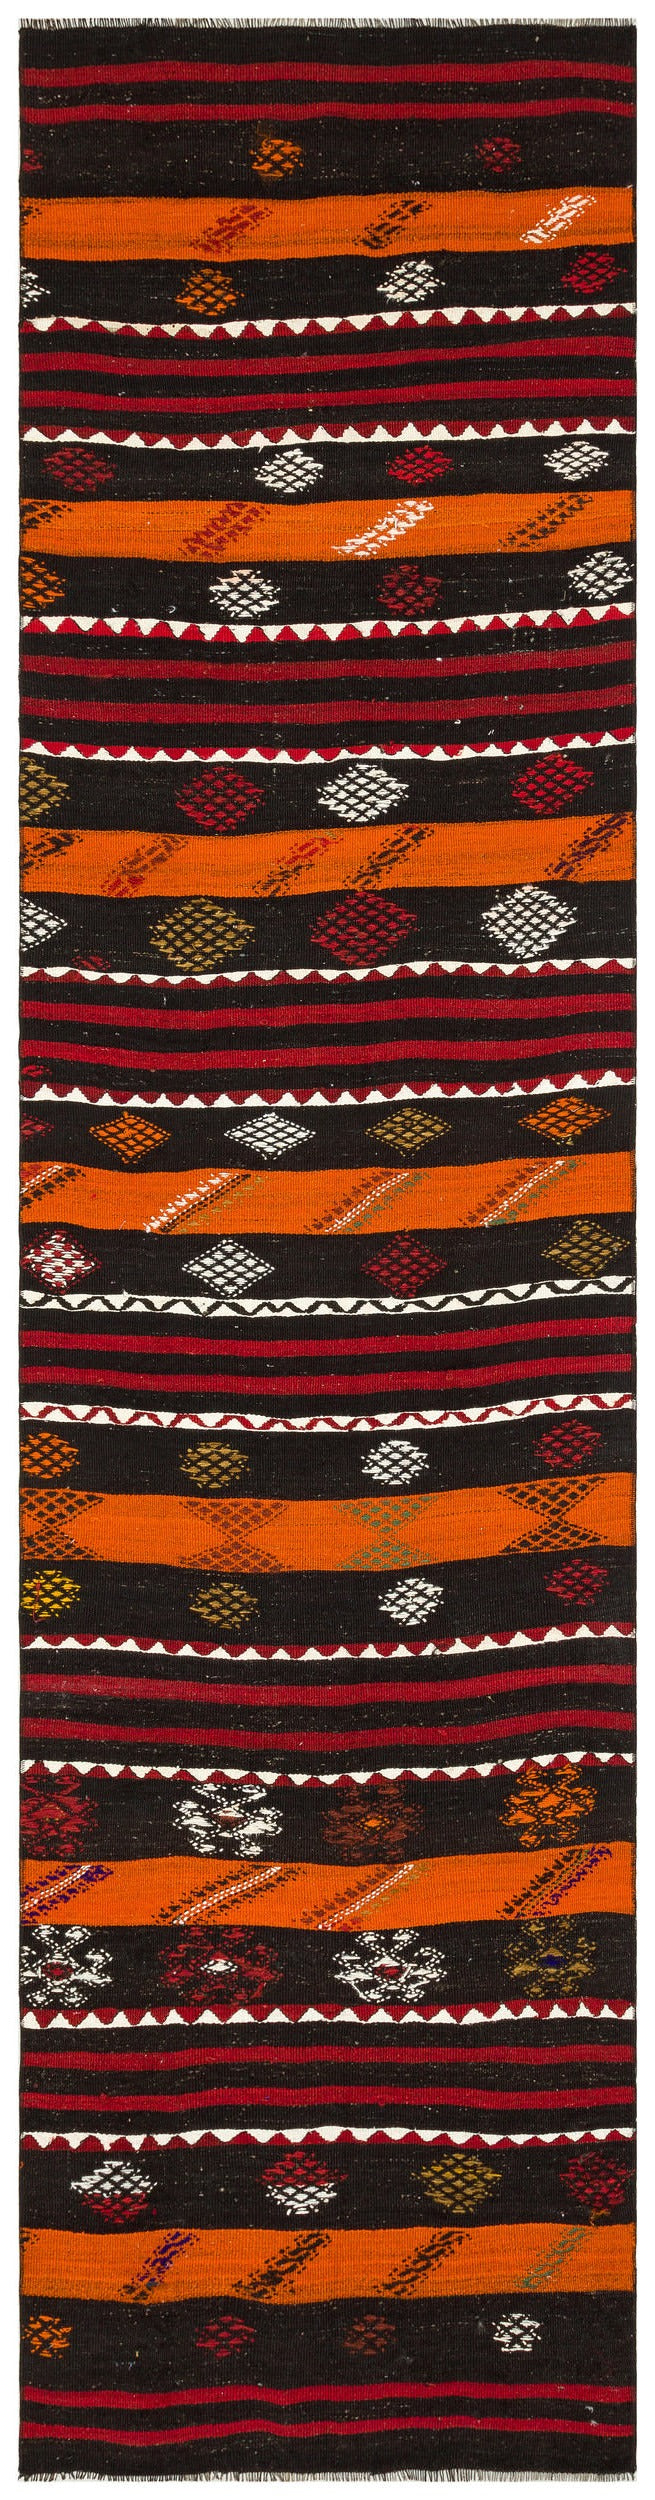 Cretan Brown Striped Wool Hand-Woven Carpet 085 x 334